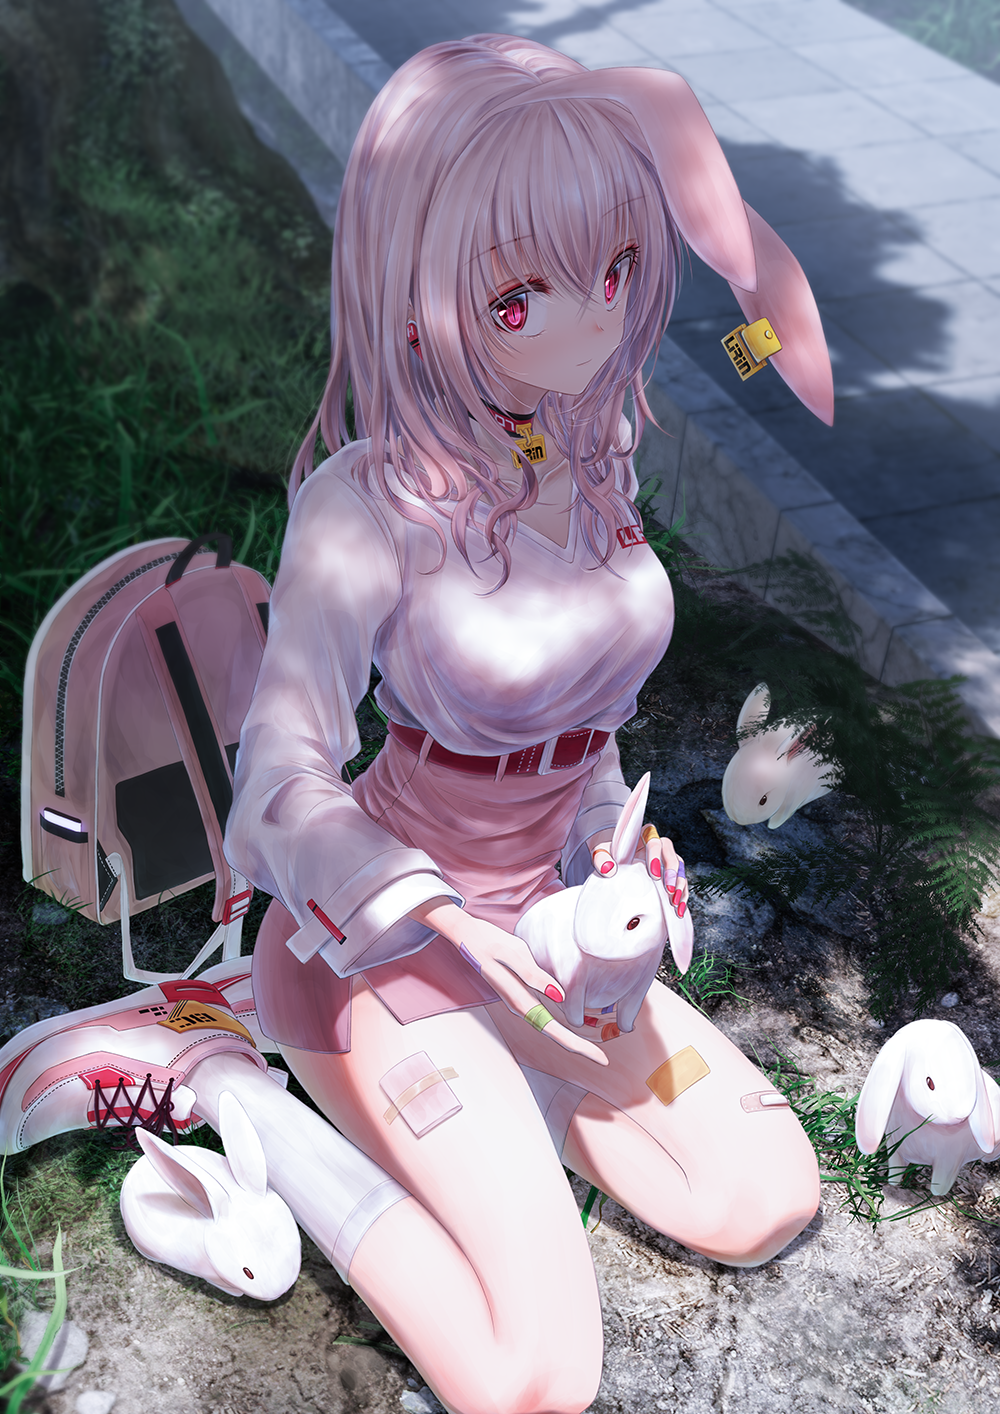 Anime 1000x1414 anime anime girls digital art artwork portrait display 2D Bae.C bunny girl rabbits kneeling